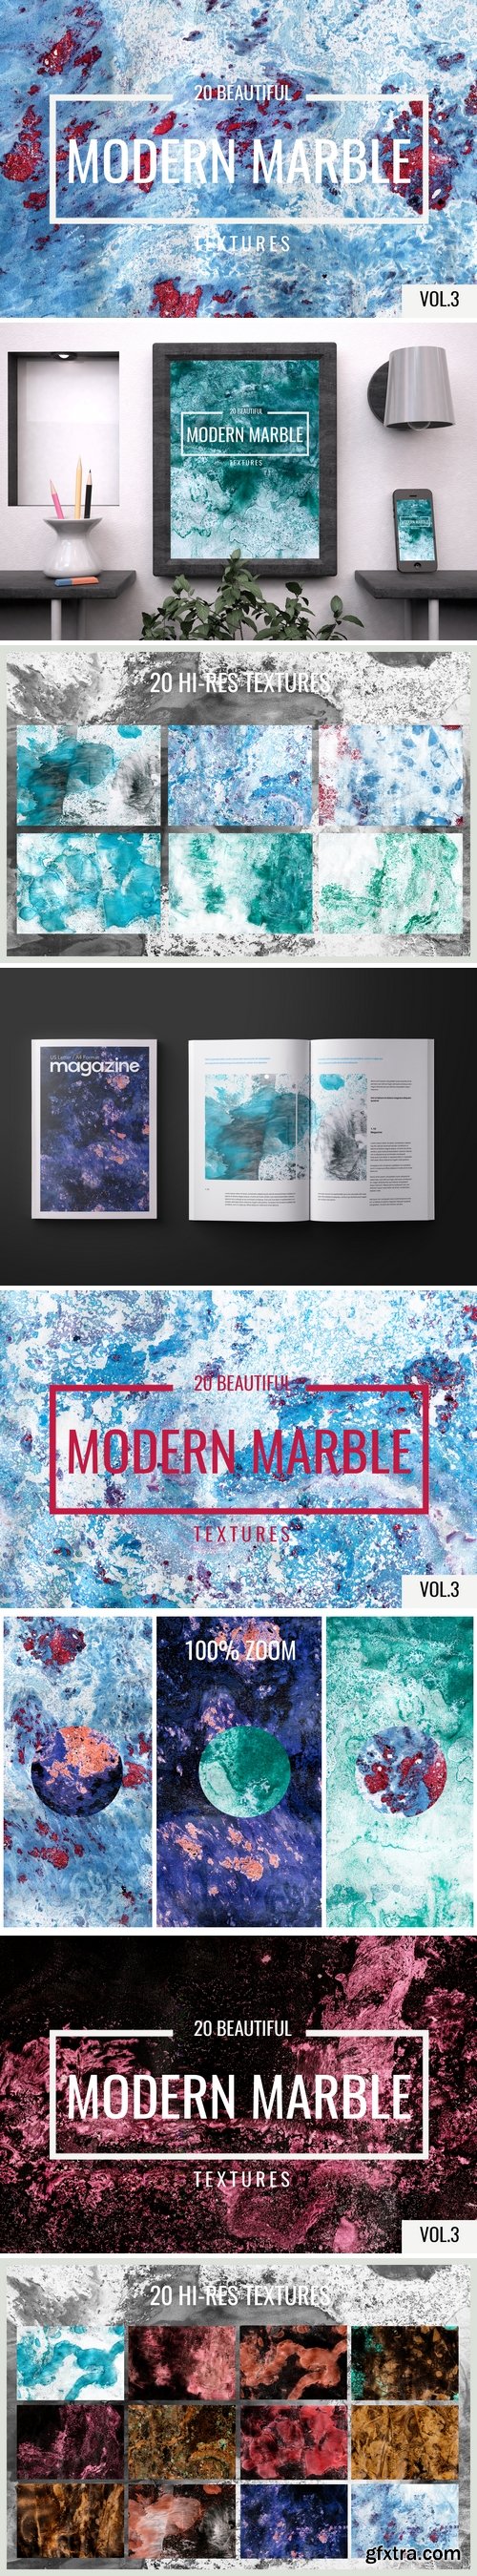 DesignBundles - Modern marble vol.3 textures backgrounds overlays backdrop 236926